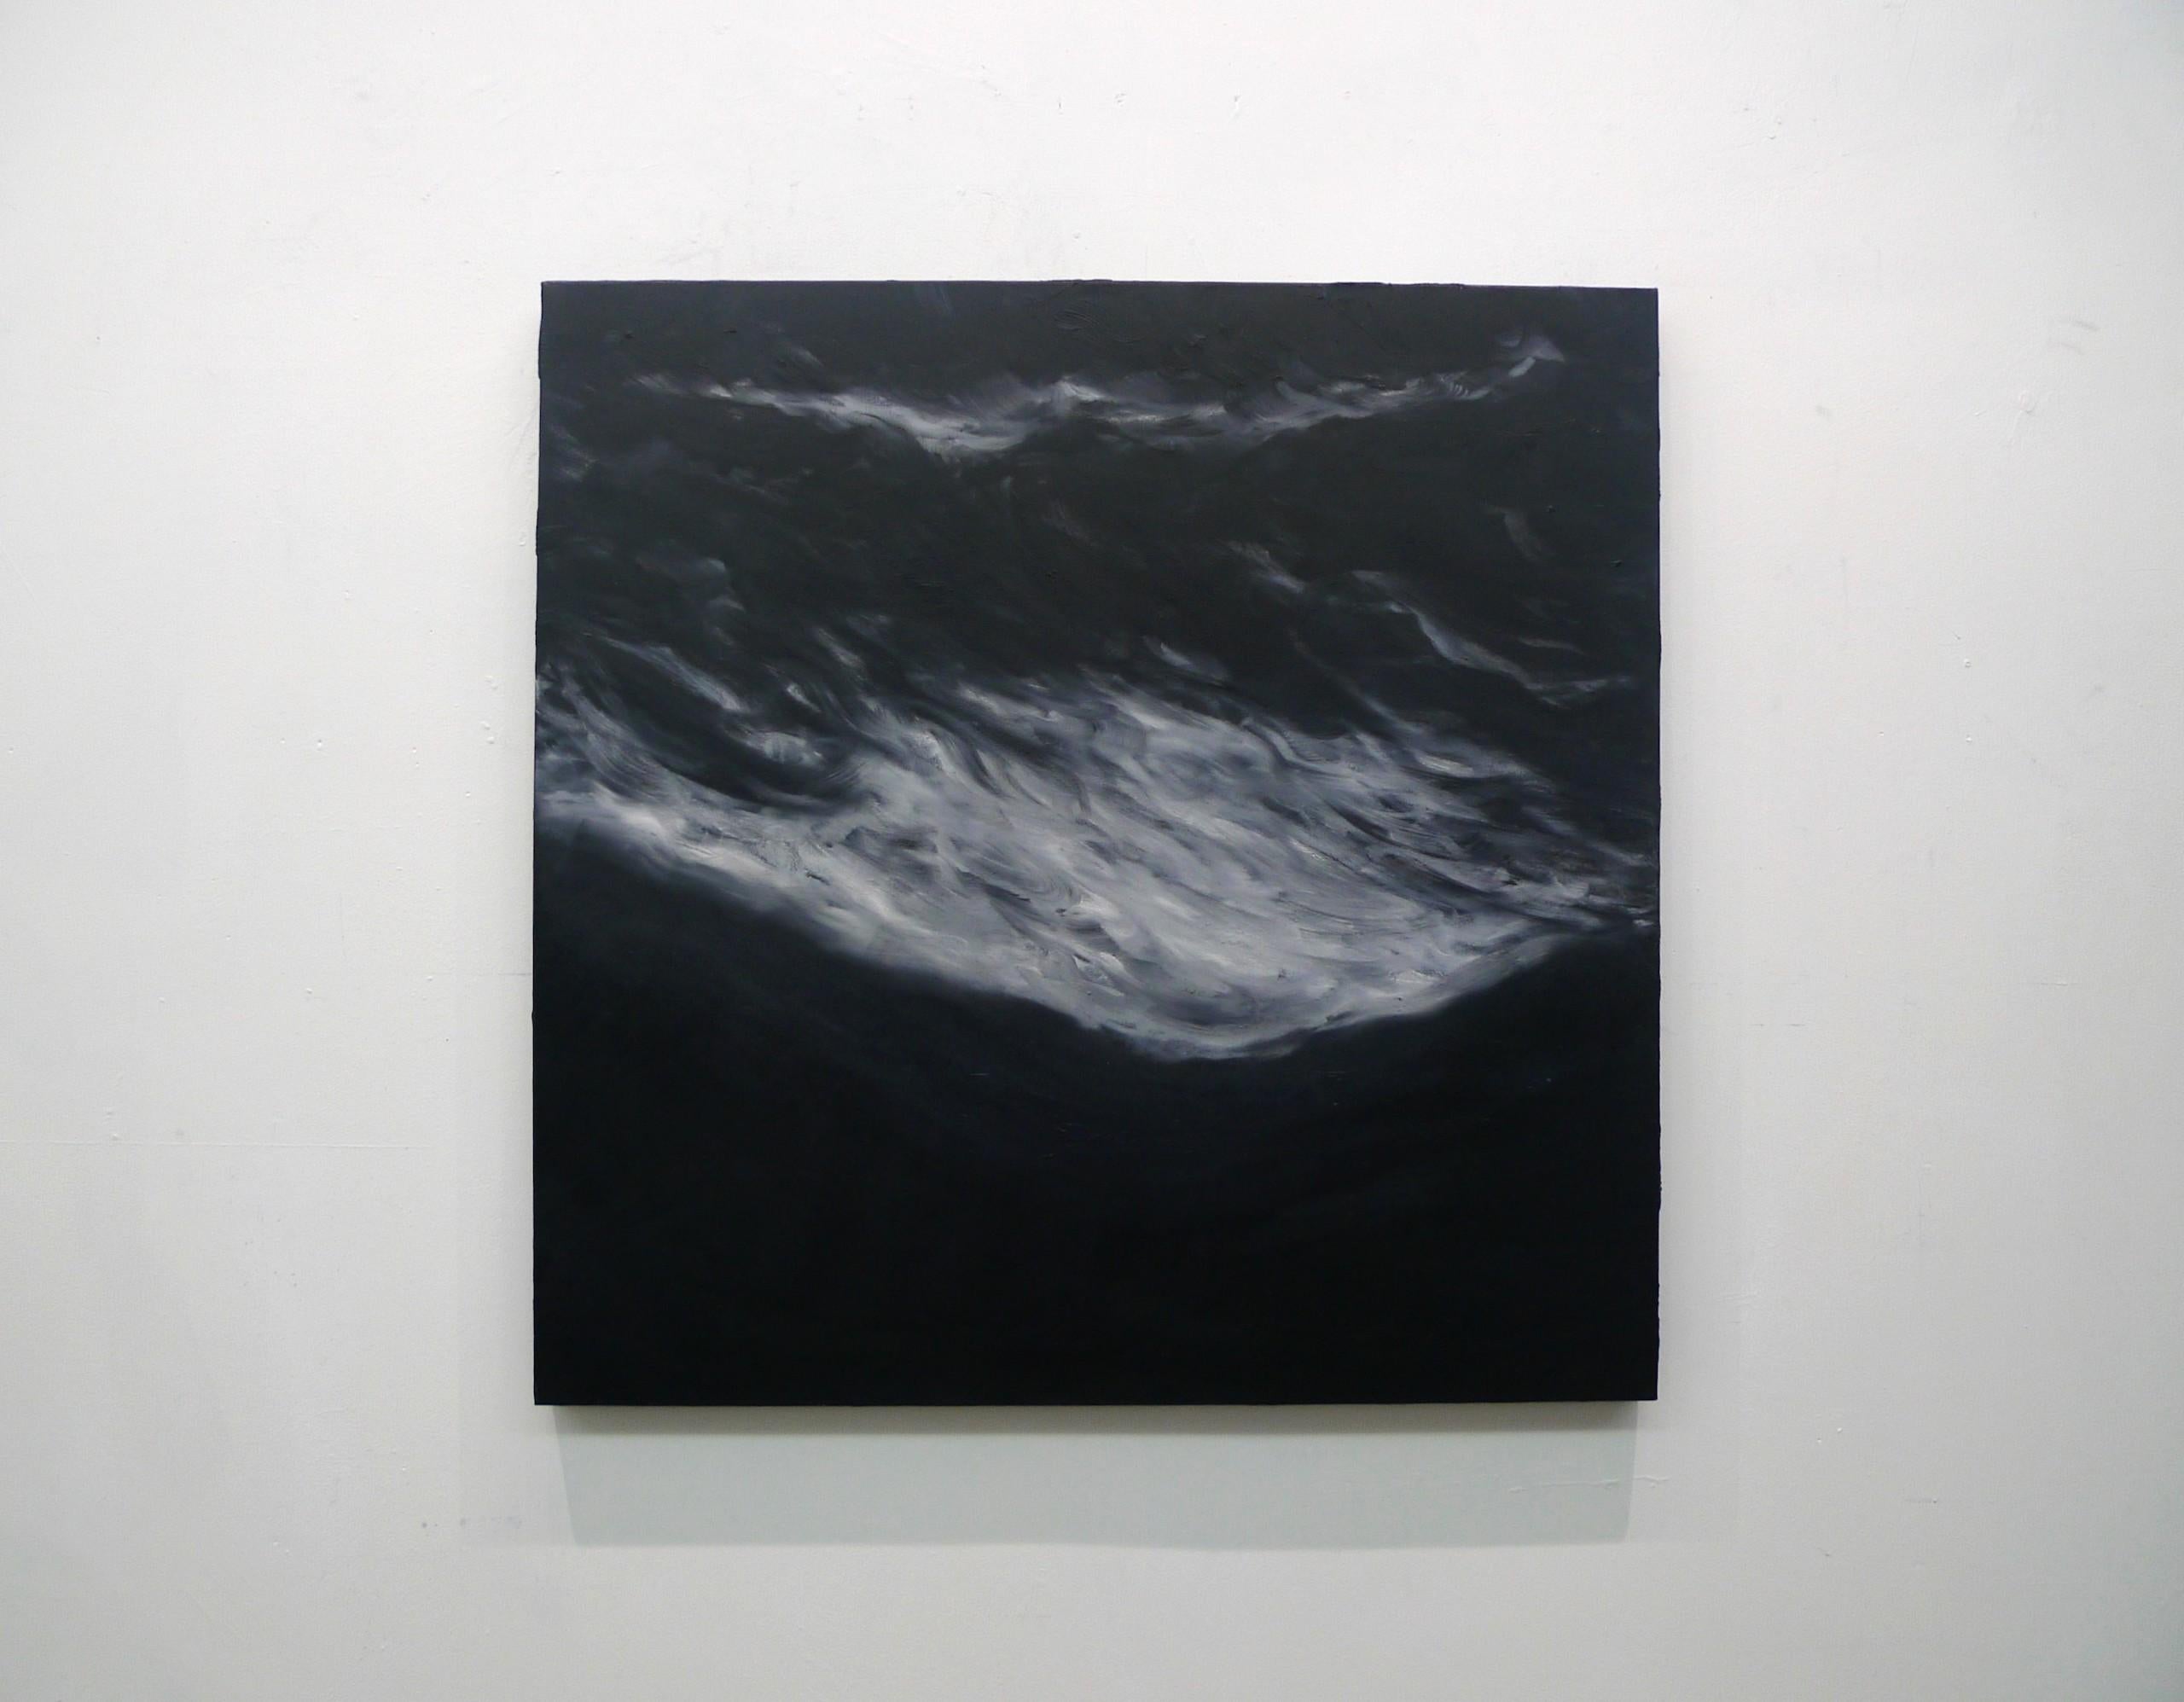 Birth by Franco Salas Borquez - Contemporary oil painting, seascape, wave, dark For Sale 1